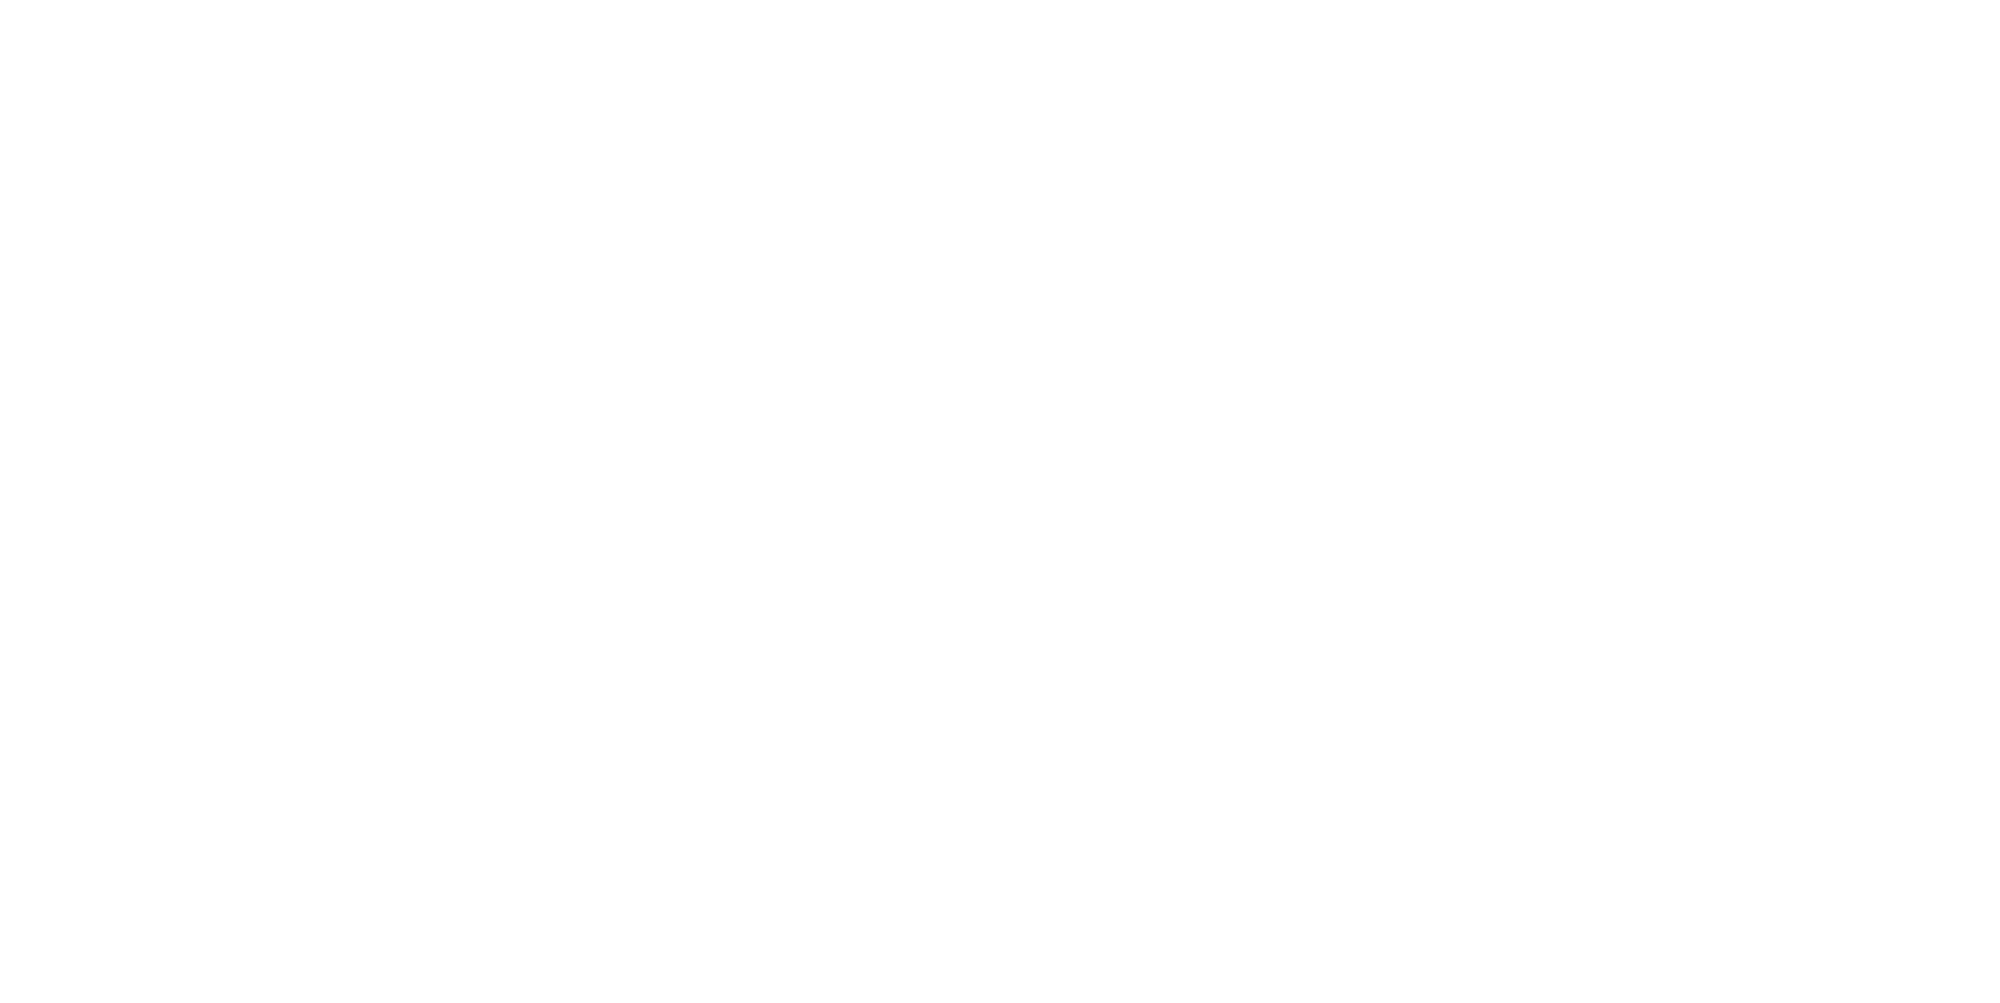 Olorun Services